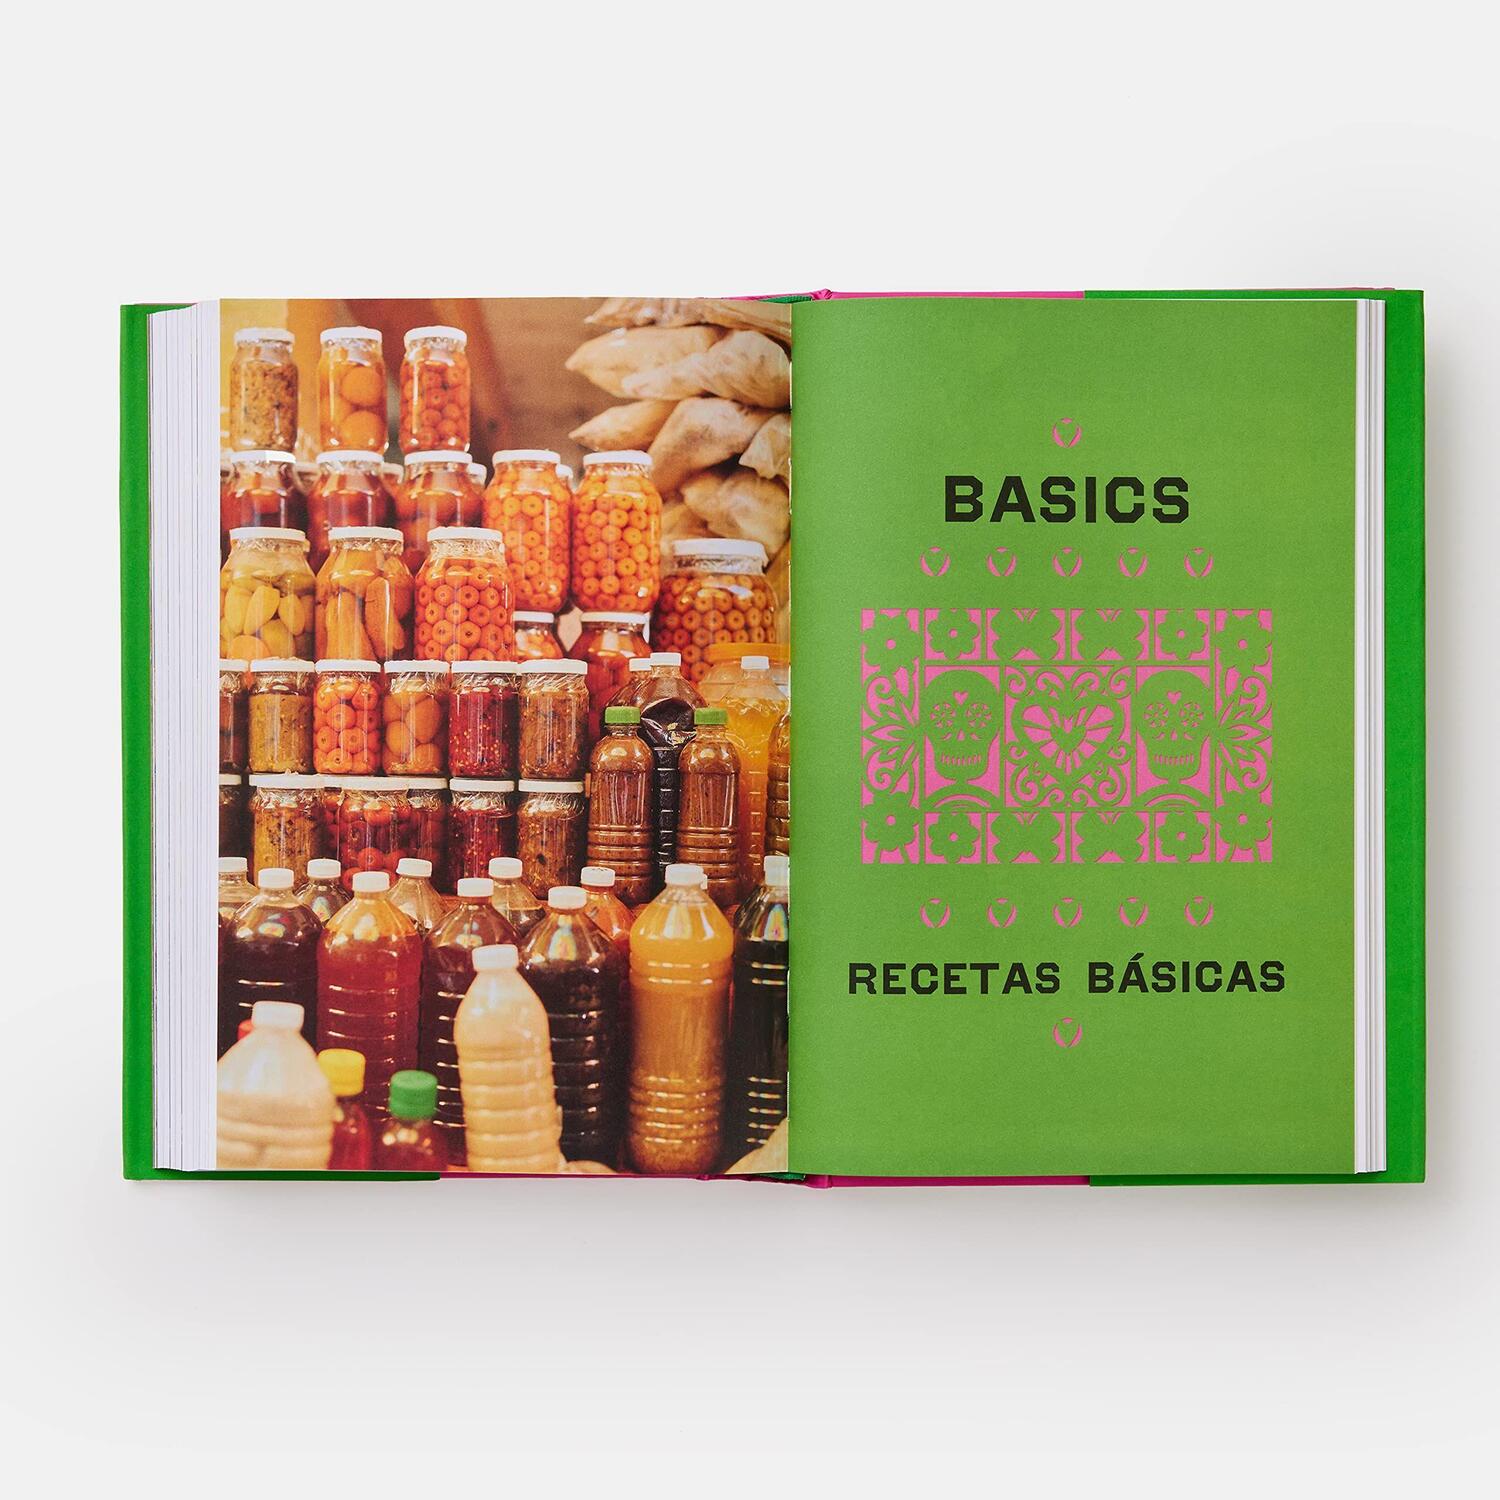 Bild: 9781838665265 | The Mexican Vegetarian Cookbook | Margarita Carrillo Arronte | Buch